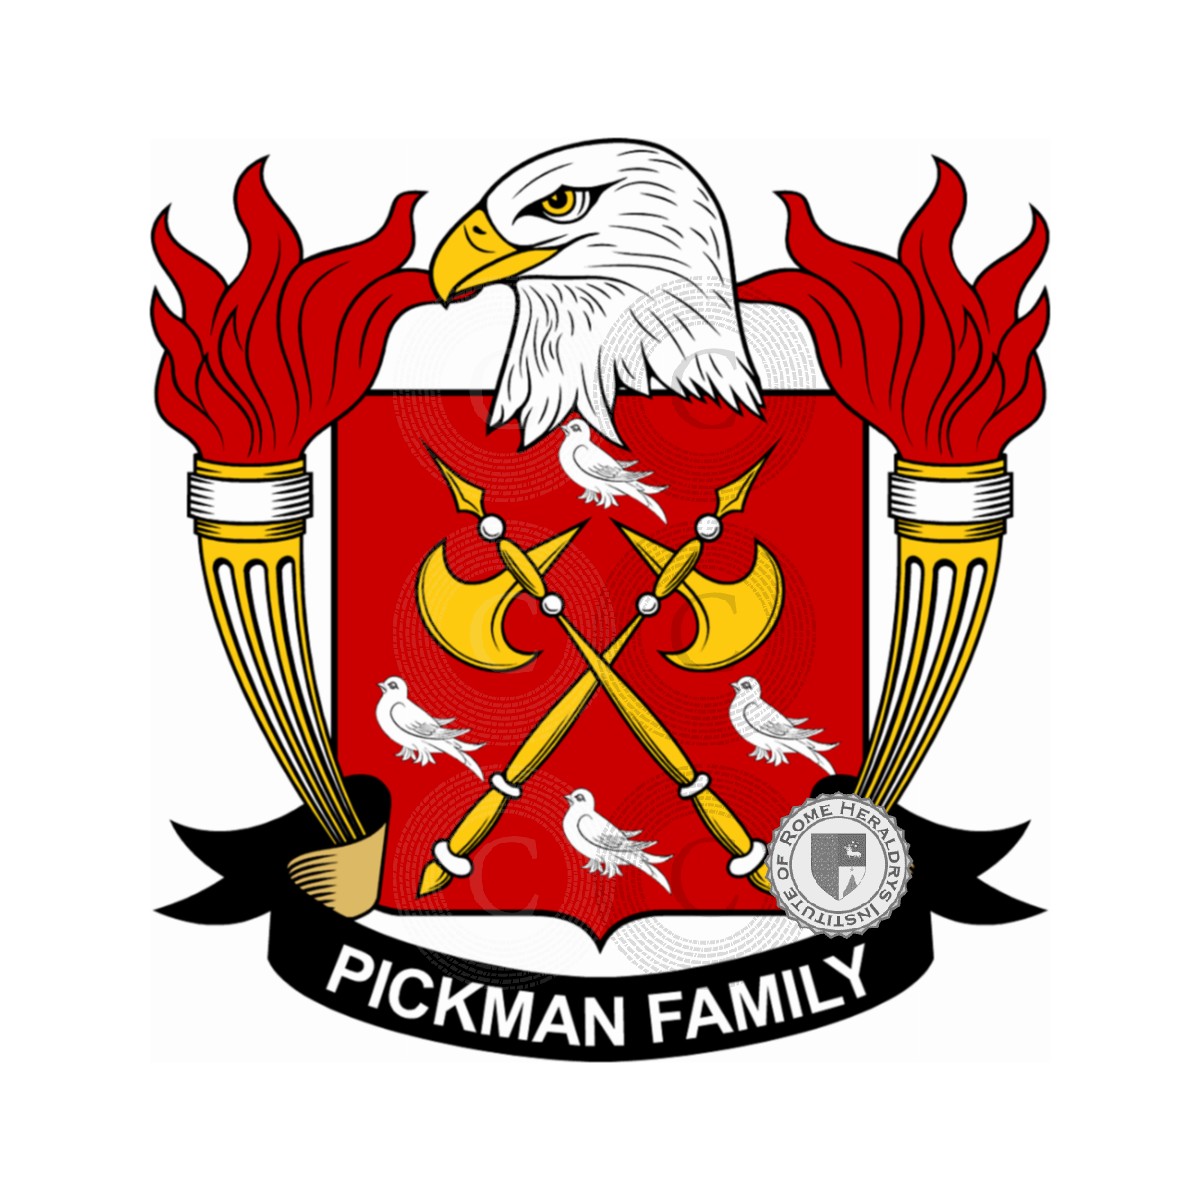 Brasão da famíliaPickman